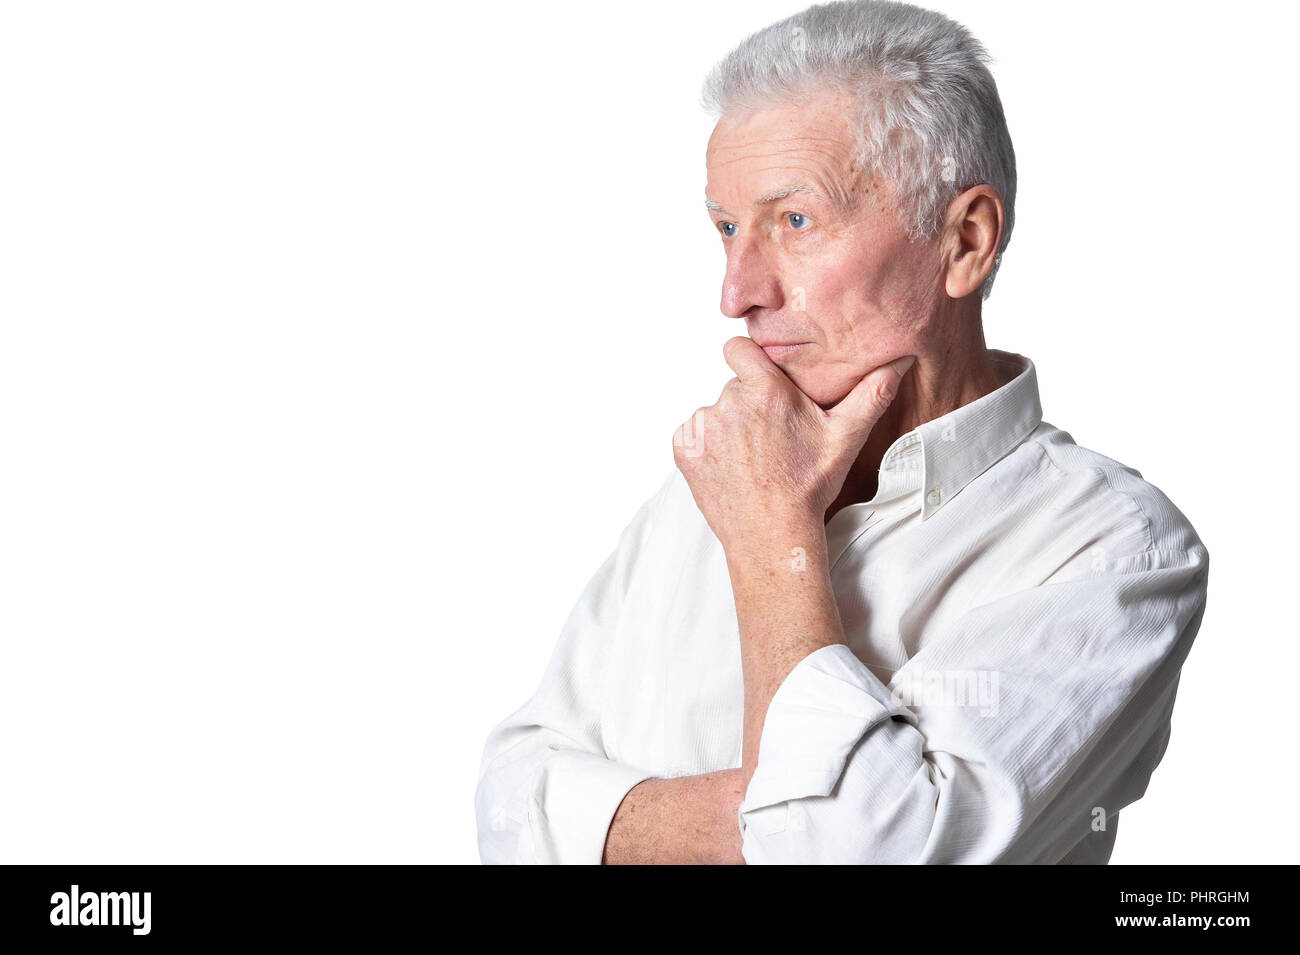 Sad senior man posing in casual clothing sur fond blanc Banque D'Images